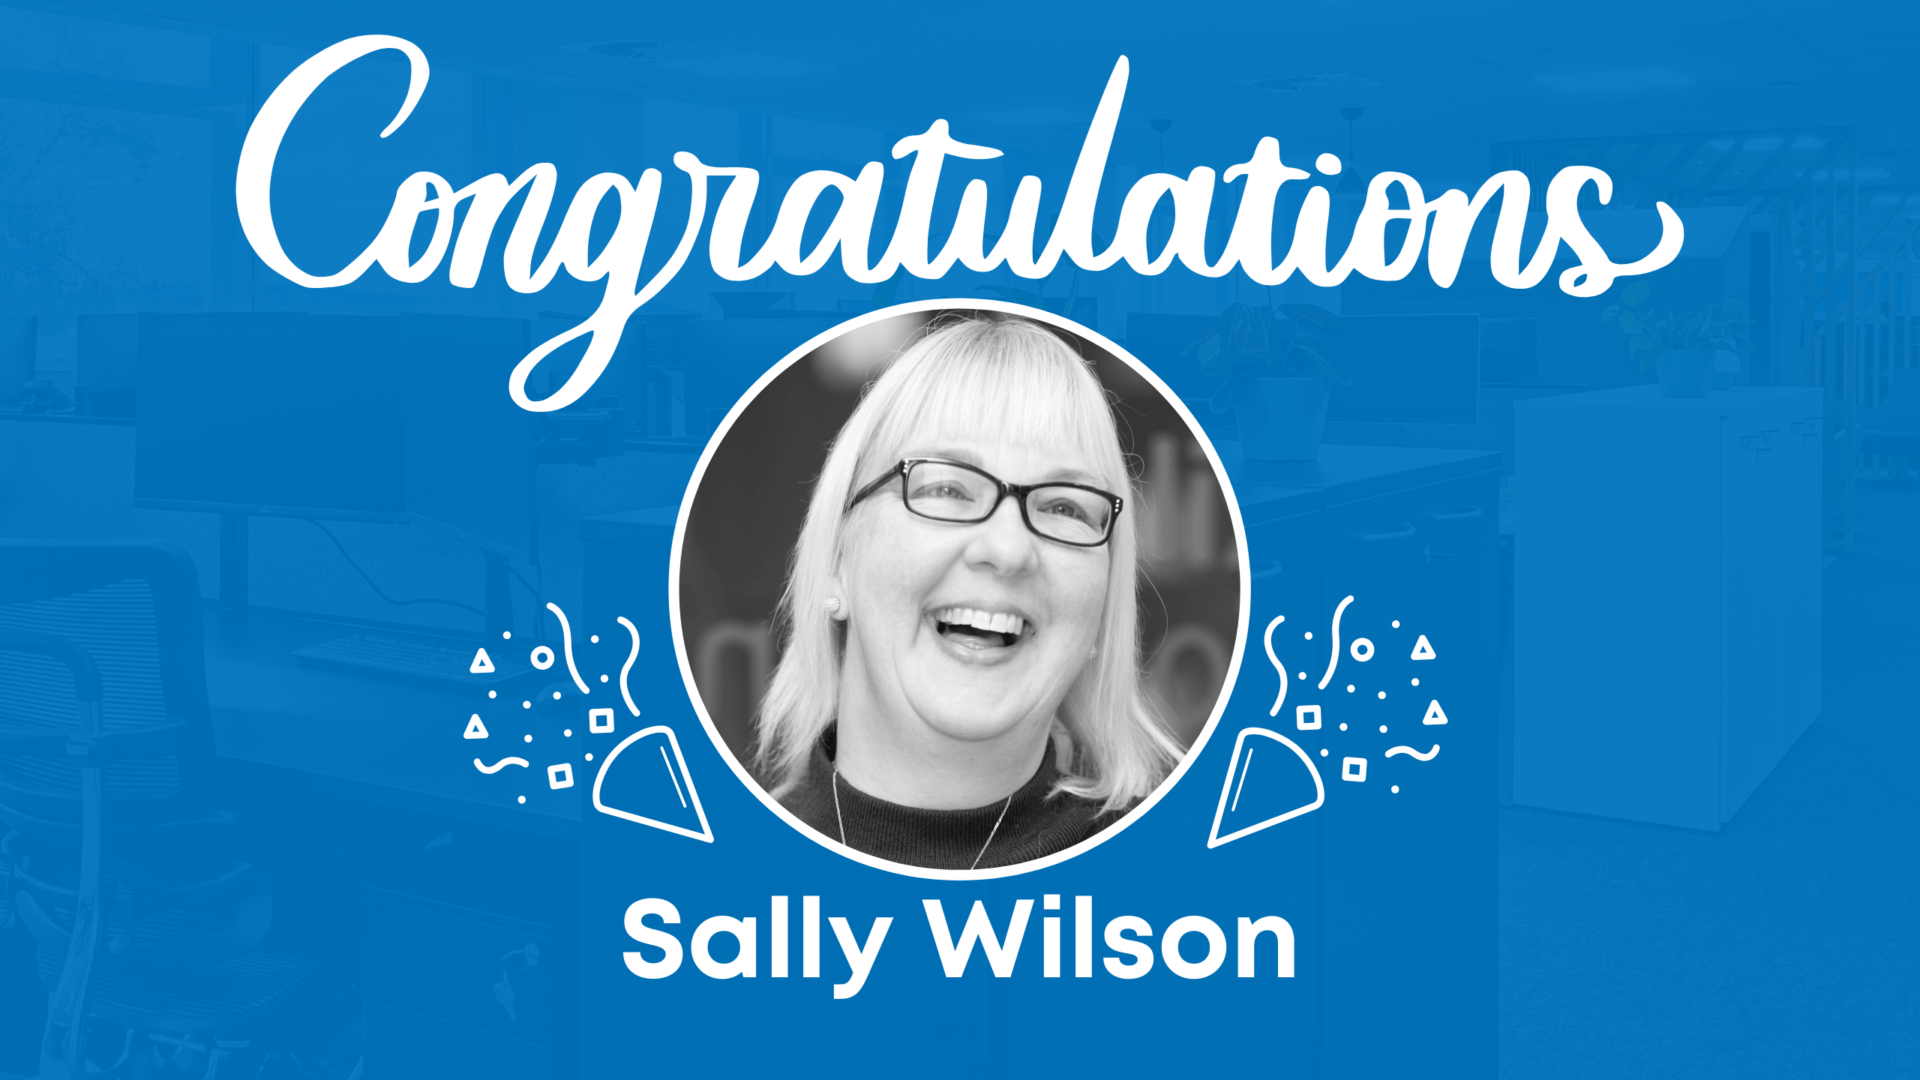 Congratulations to Sally Wilson